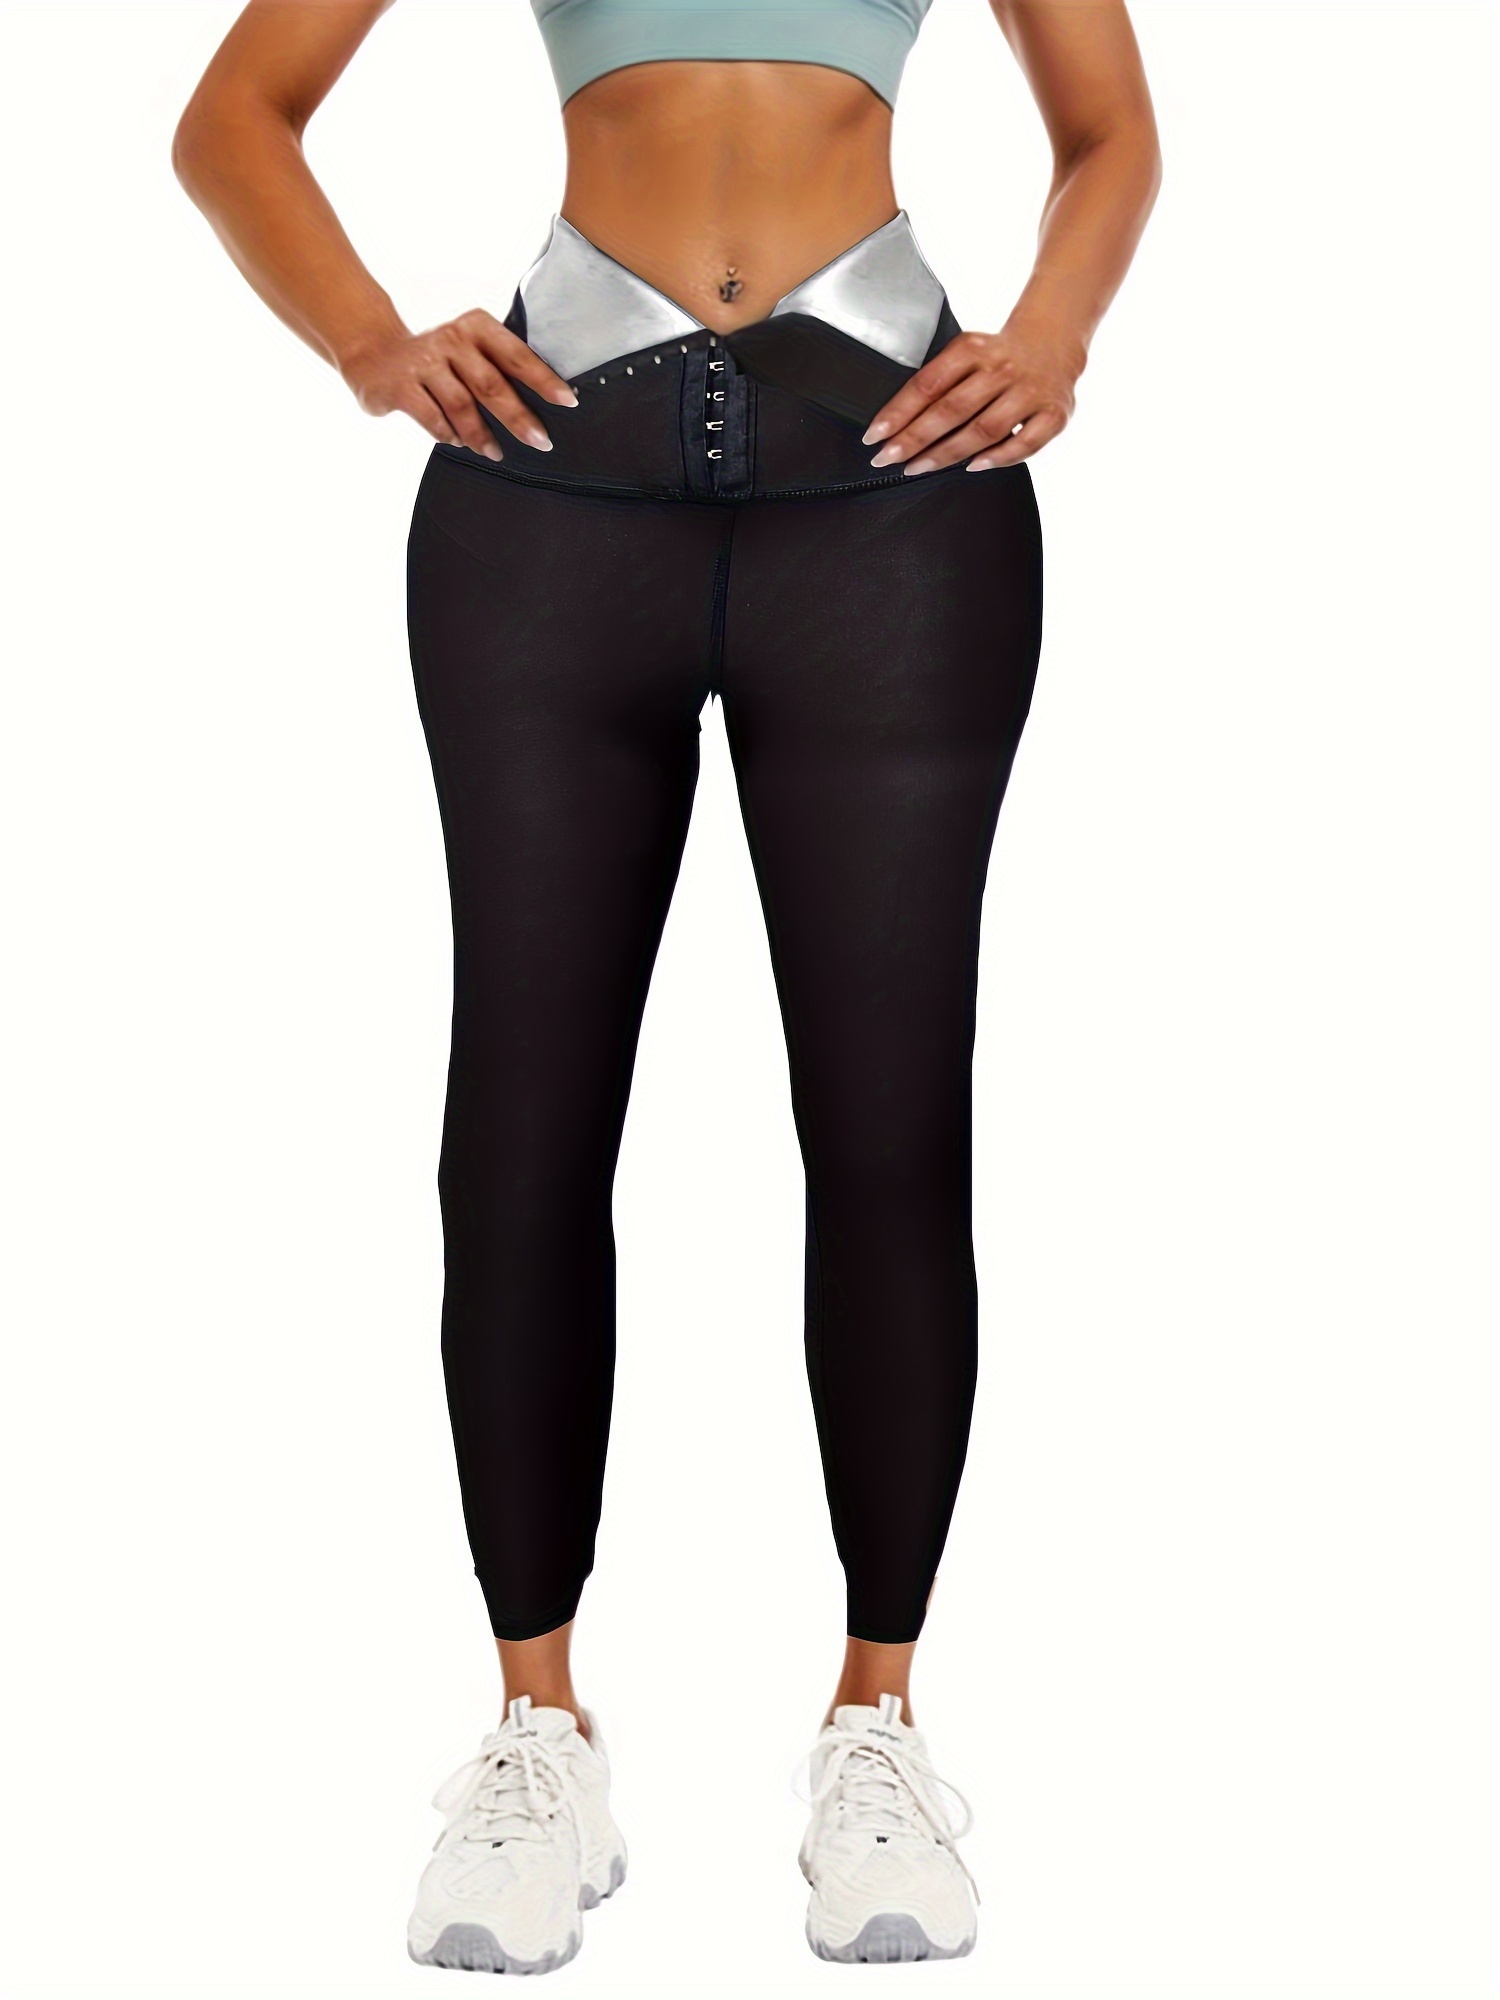 Women Shaper Pants Body Shaper Hot Sweat Sauna Effect Slimming Pants Belly  Control Shapewear Workout Gym Leggings Fitness Shorts Z